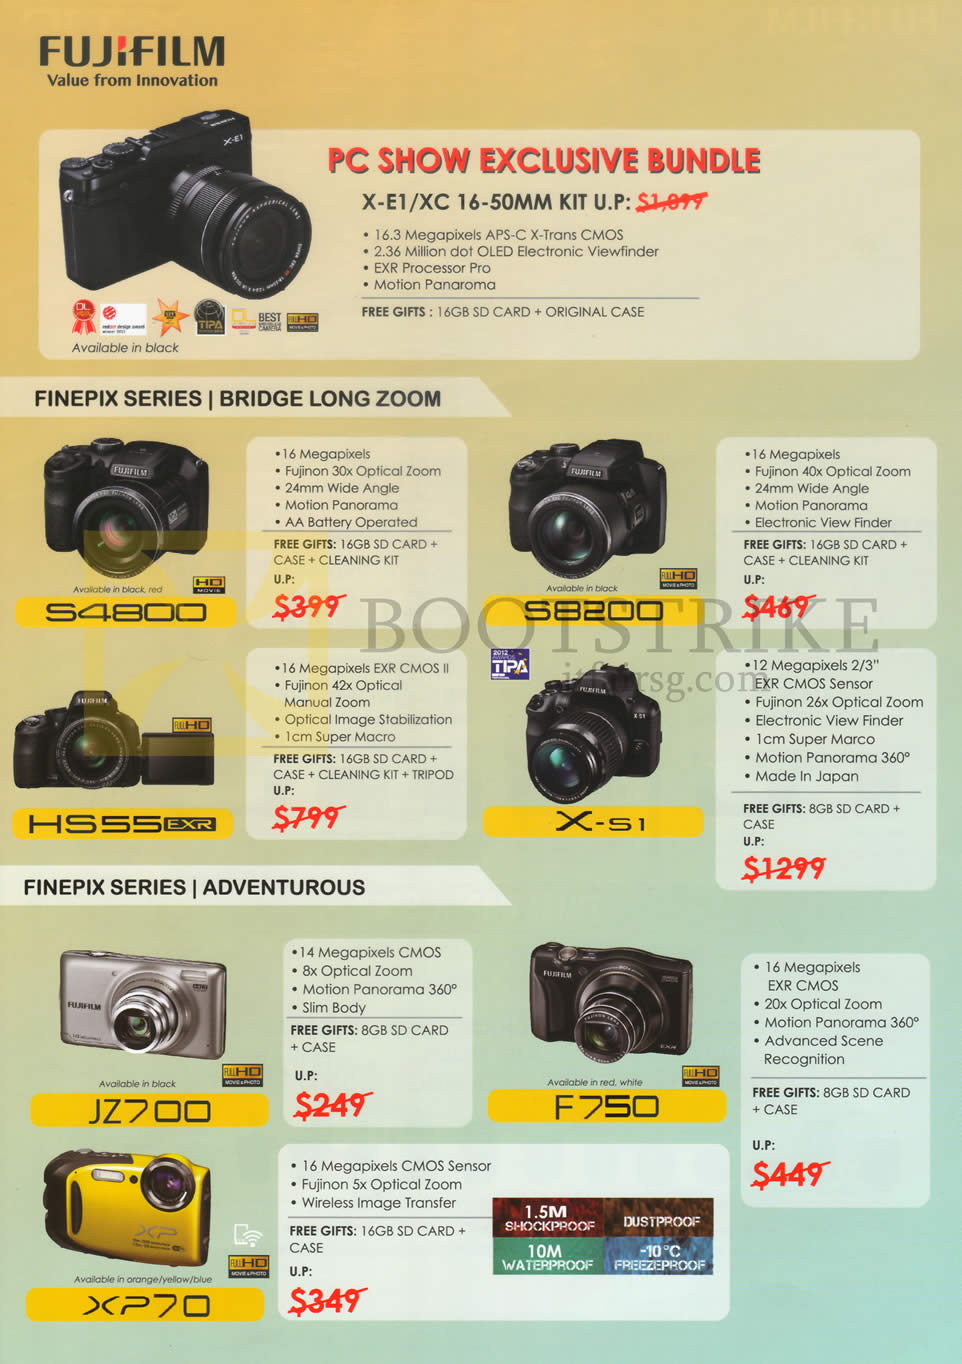 PC SHOW 2015 price list image brochure of Fujifilm (No Prices) Digital Cameras S4800, S8200, HS55, X-51, JZ700, F750, XP70